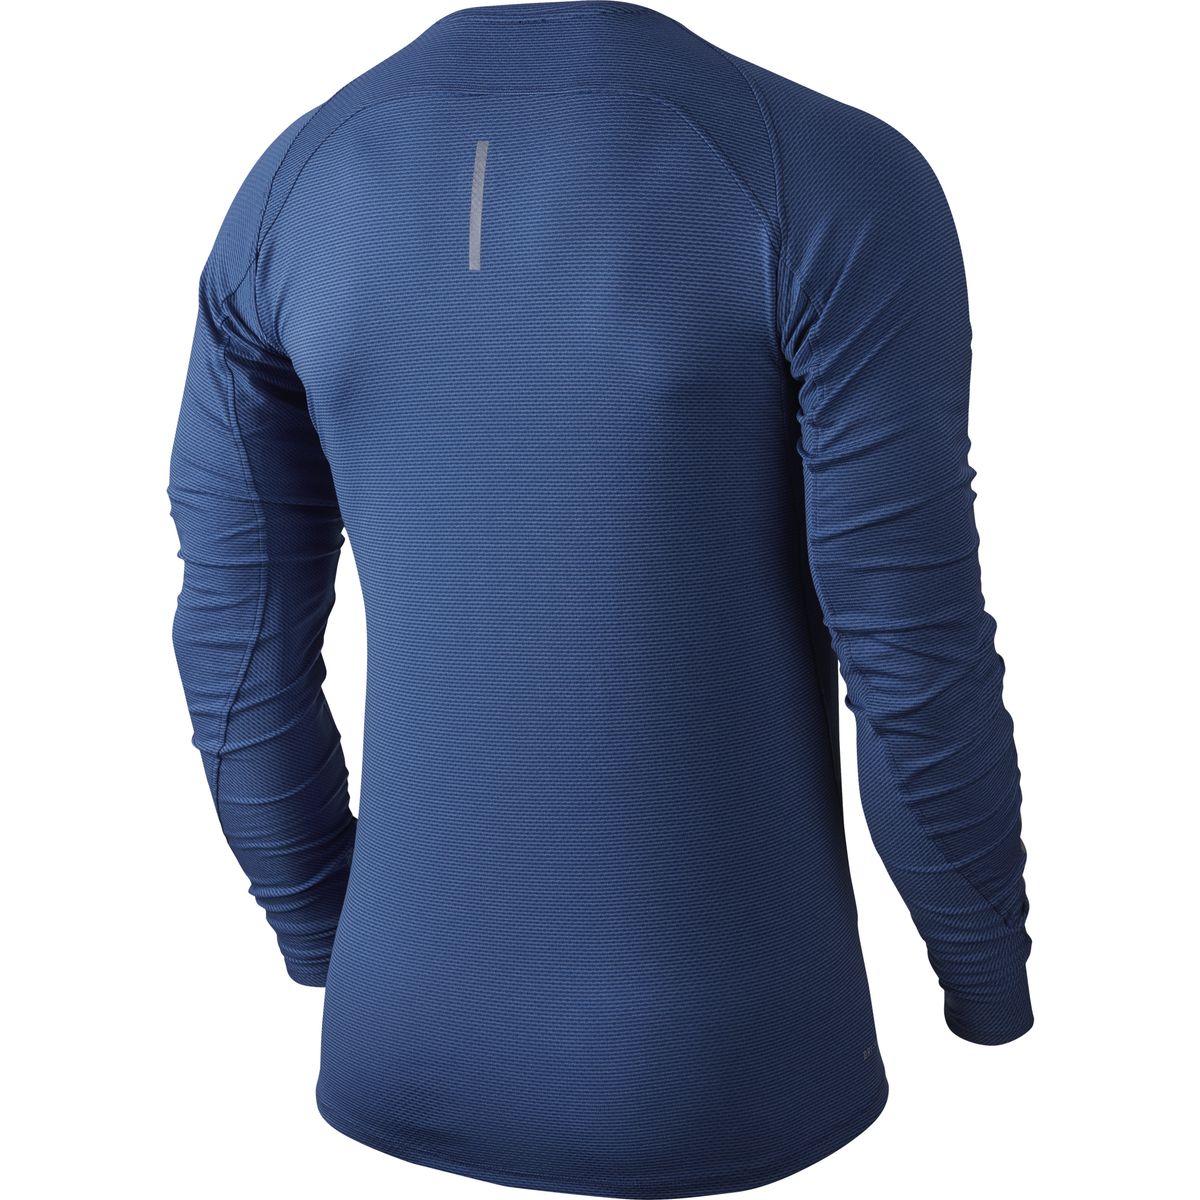 Nike Dri-Fit AeroReact Shirt - Men's - Clothing